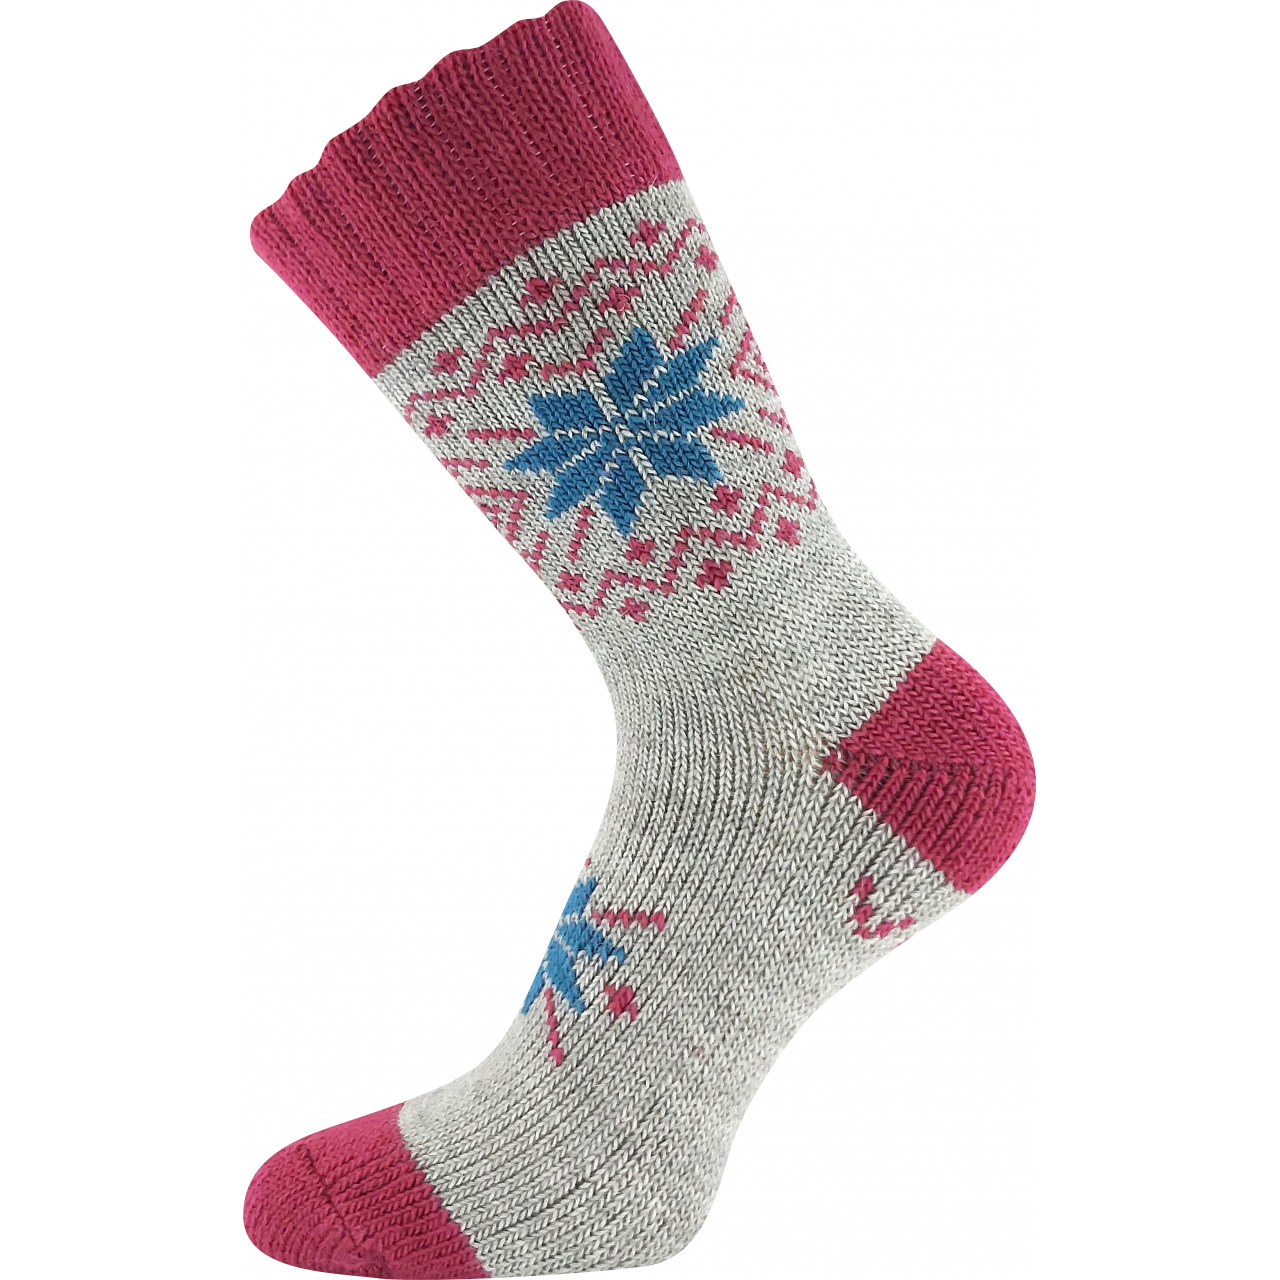 Ponožky unisex silné Voxx Alta - šedé-červené, 39-42